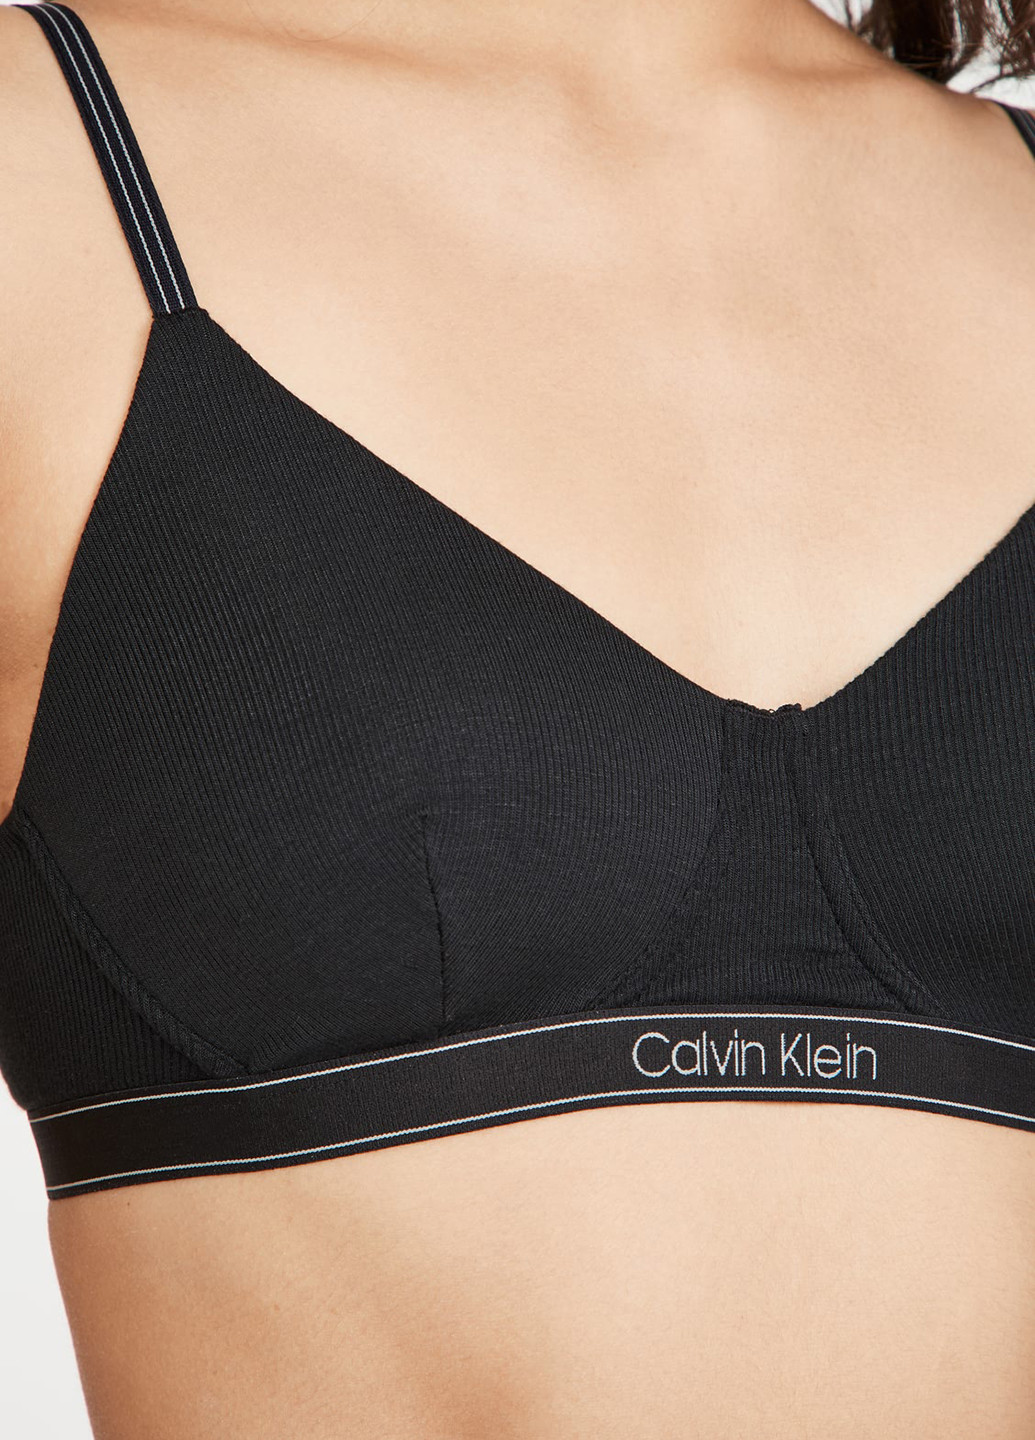 Чёрный бюстгальтер Calvin Klein с косточками трикотаж, модал